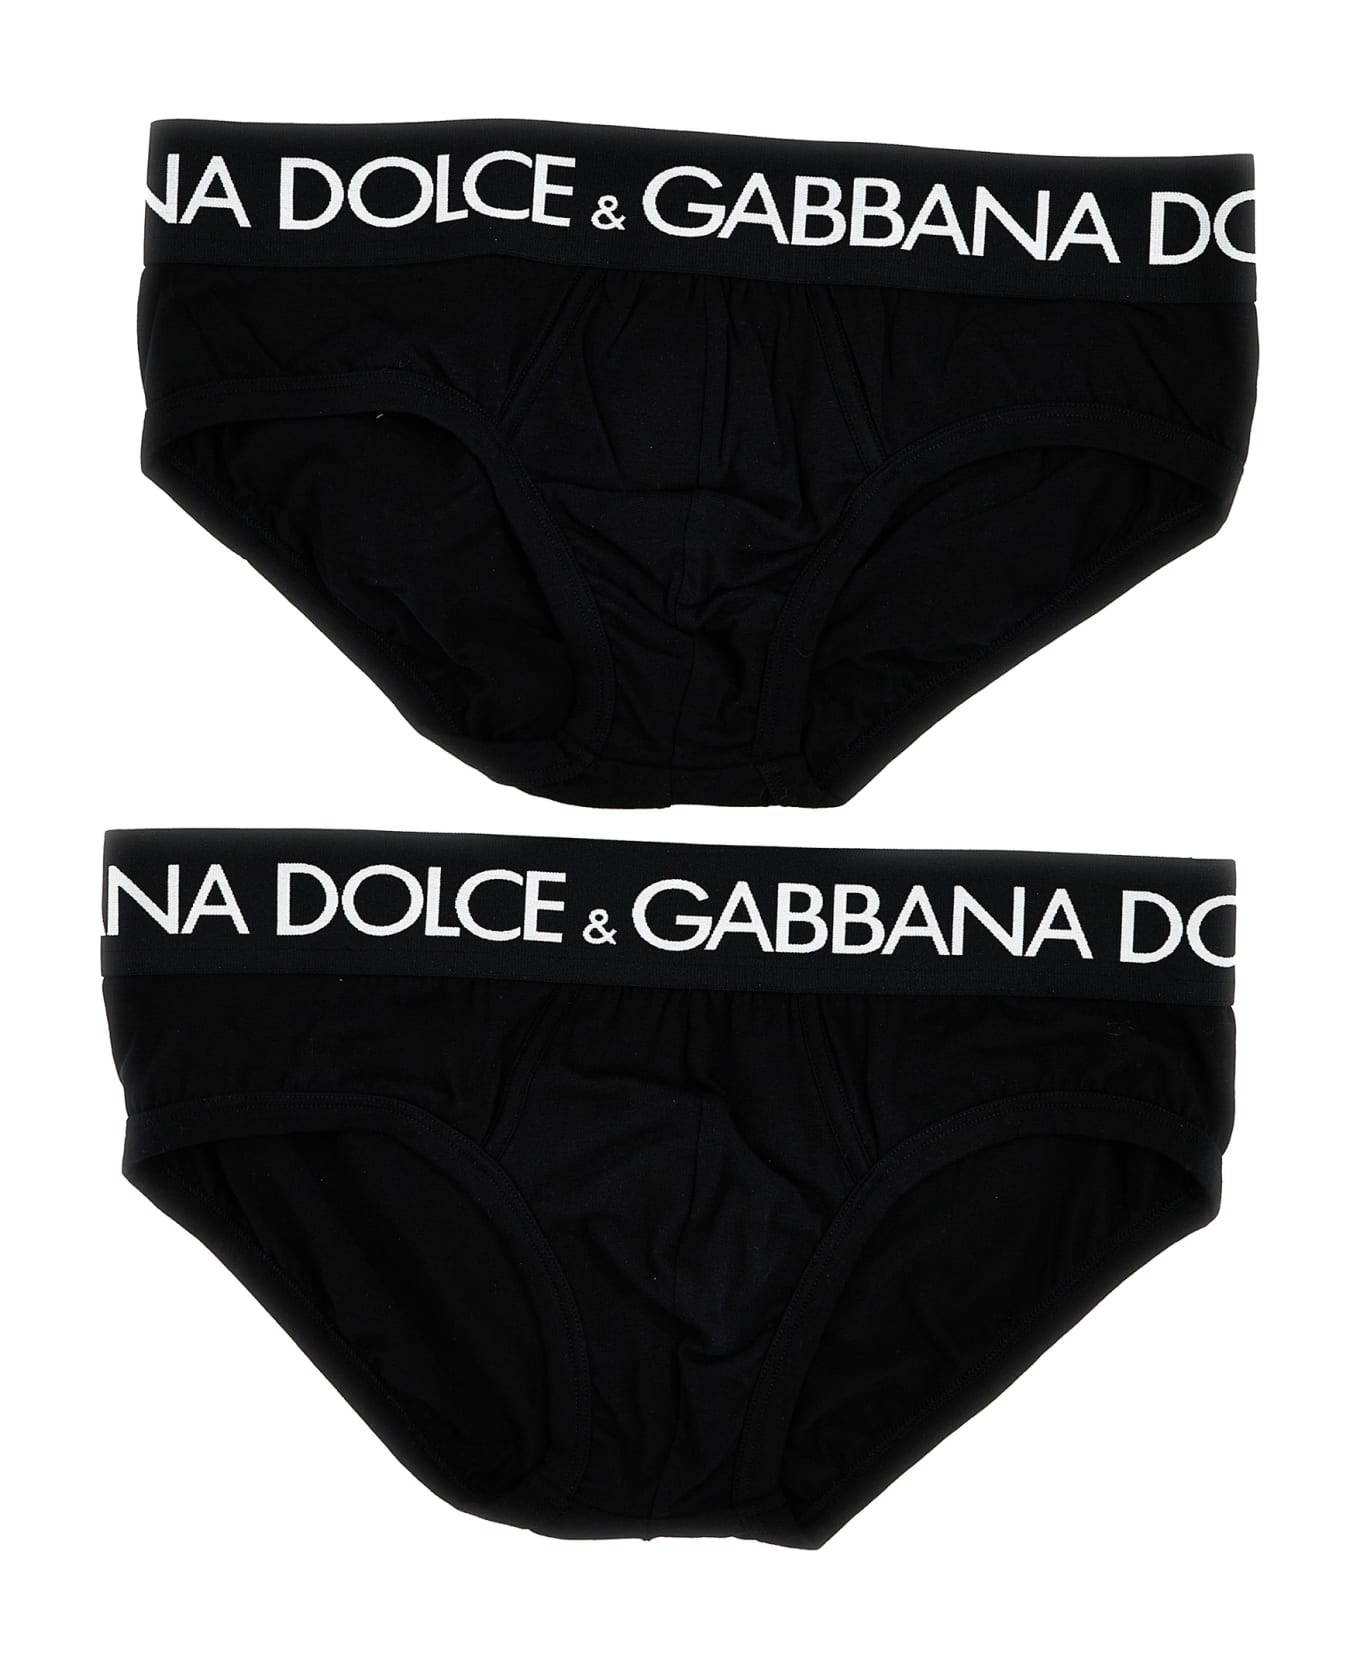 Dolce & Gabbana Brando Briefs - Black ショーツ